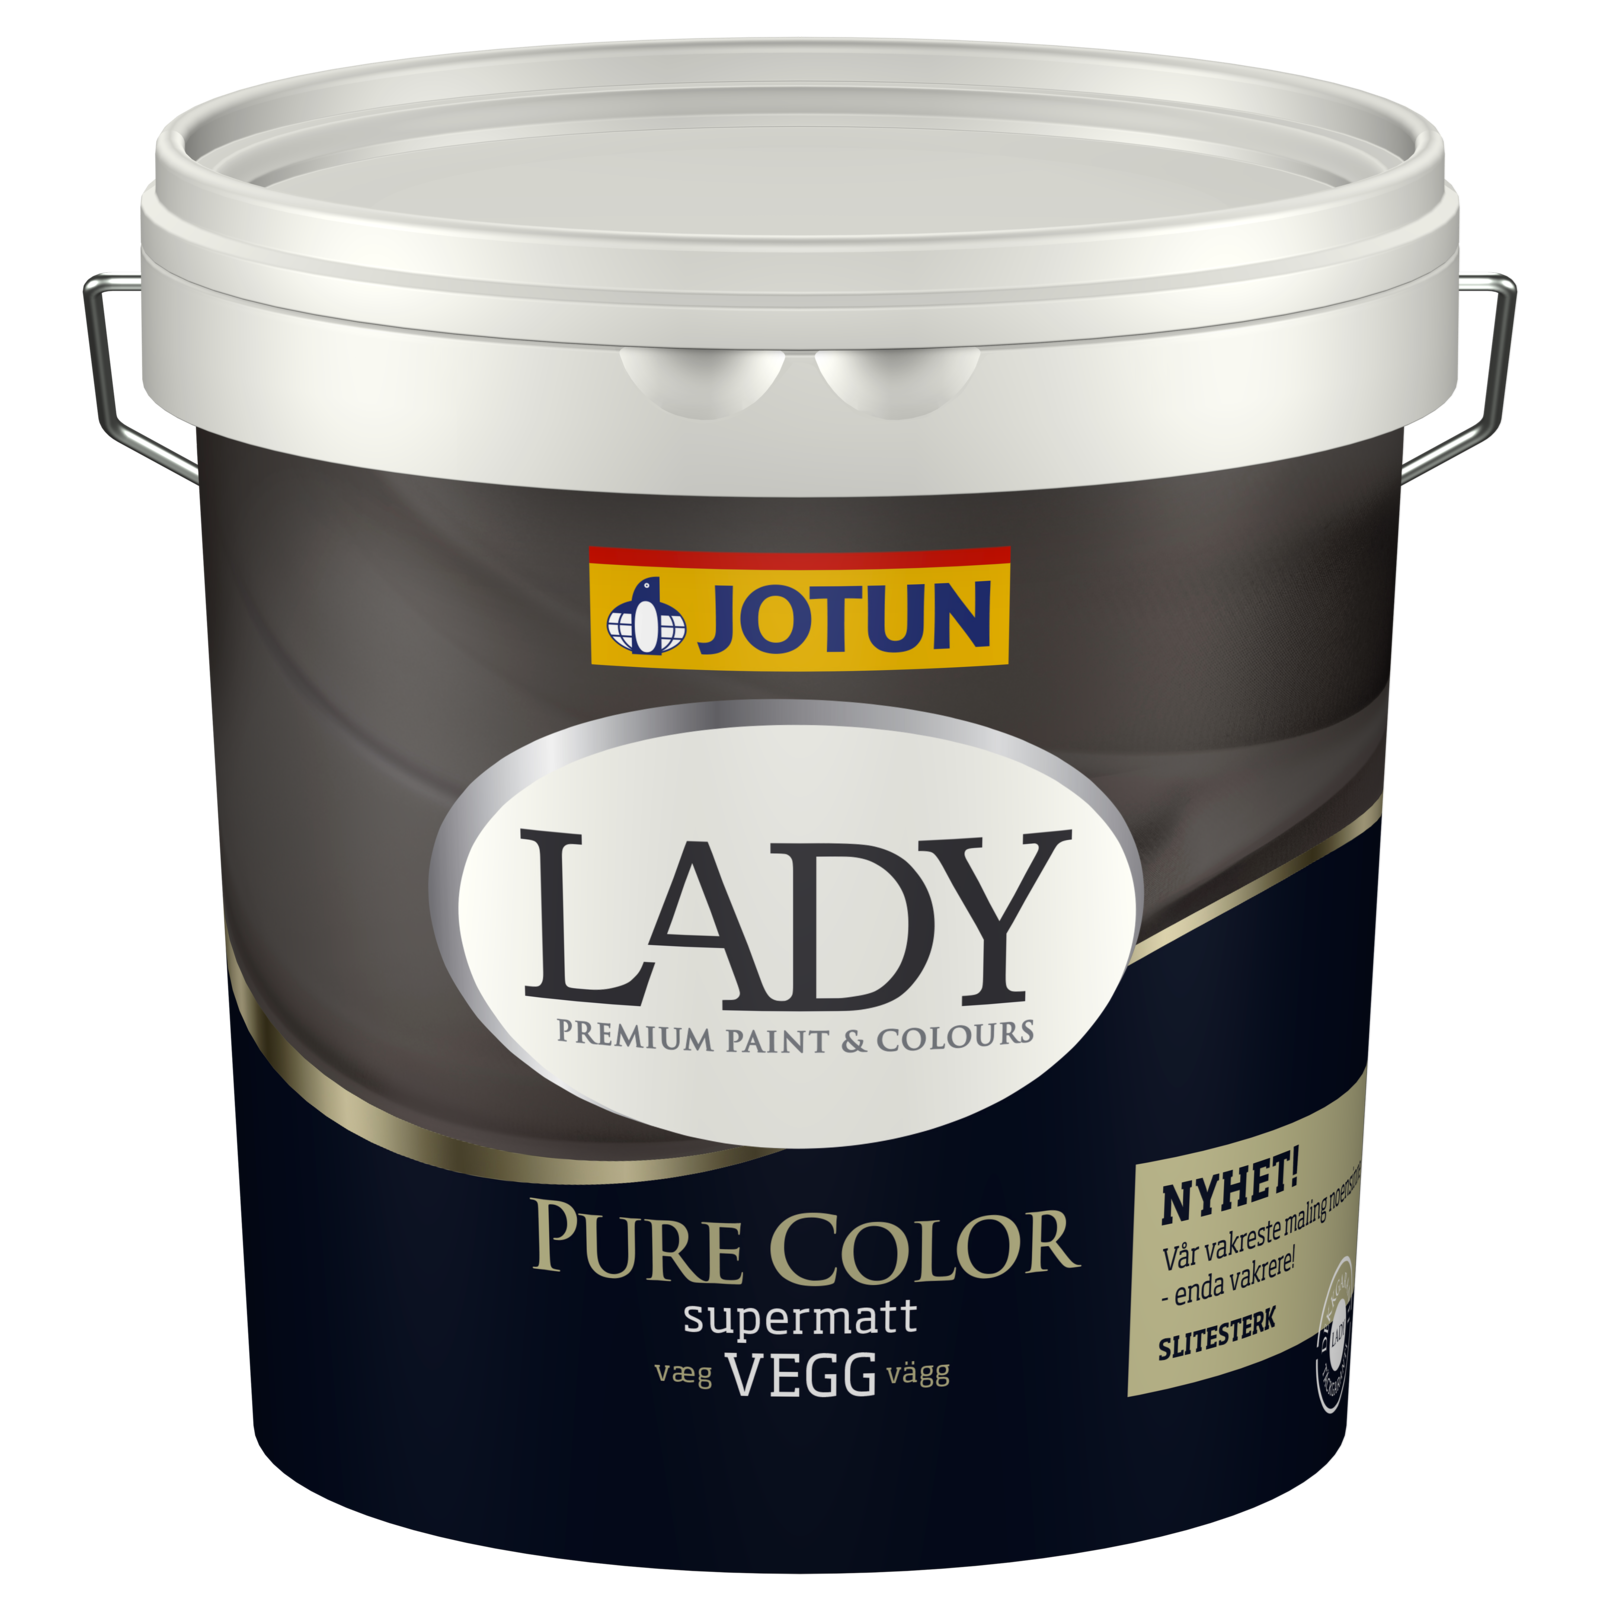 lady pure color 3 l - august 2017-medium